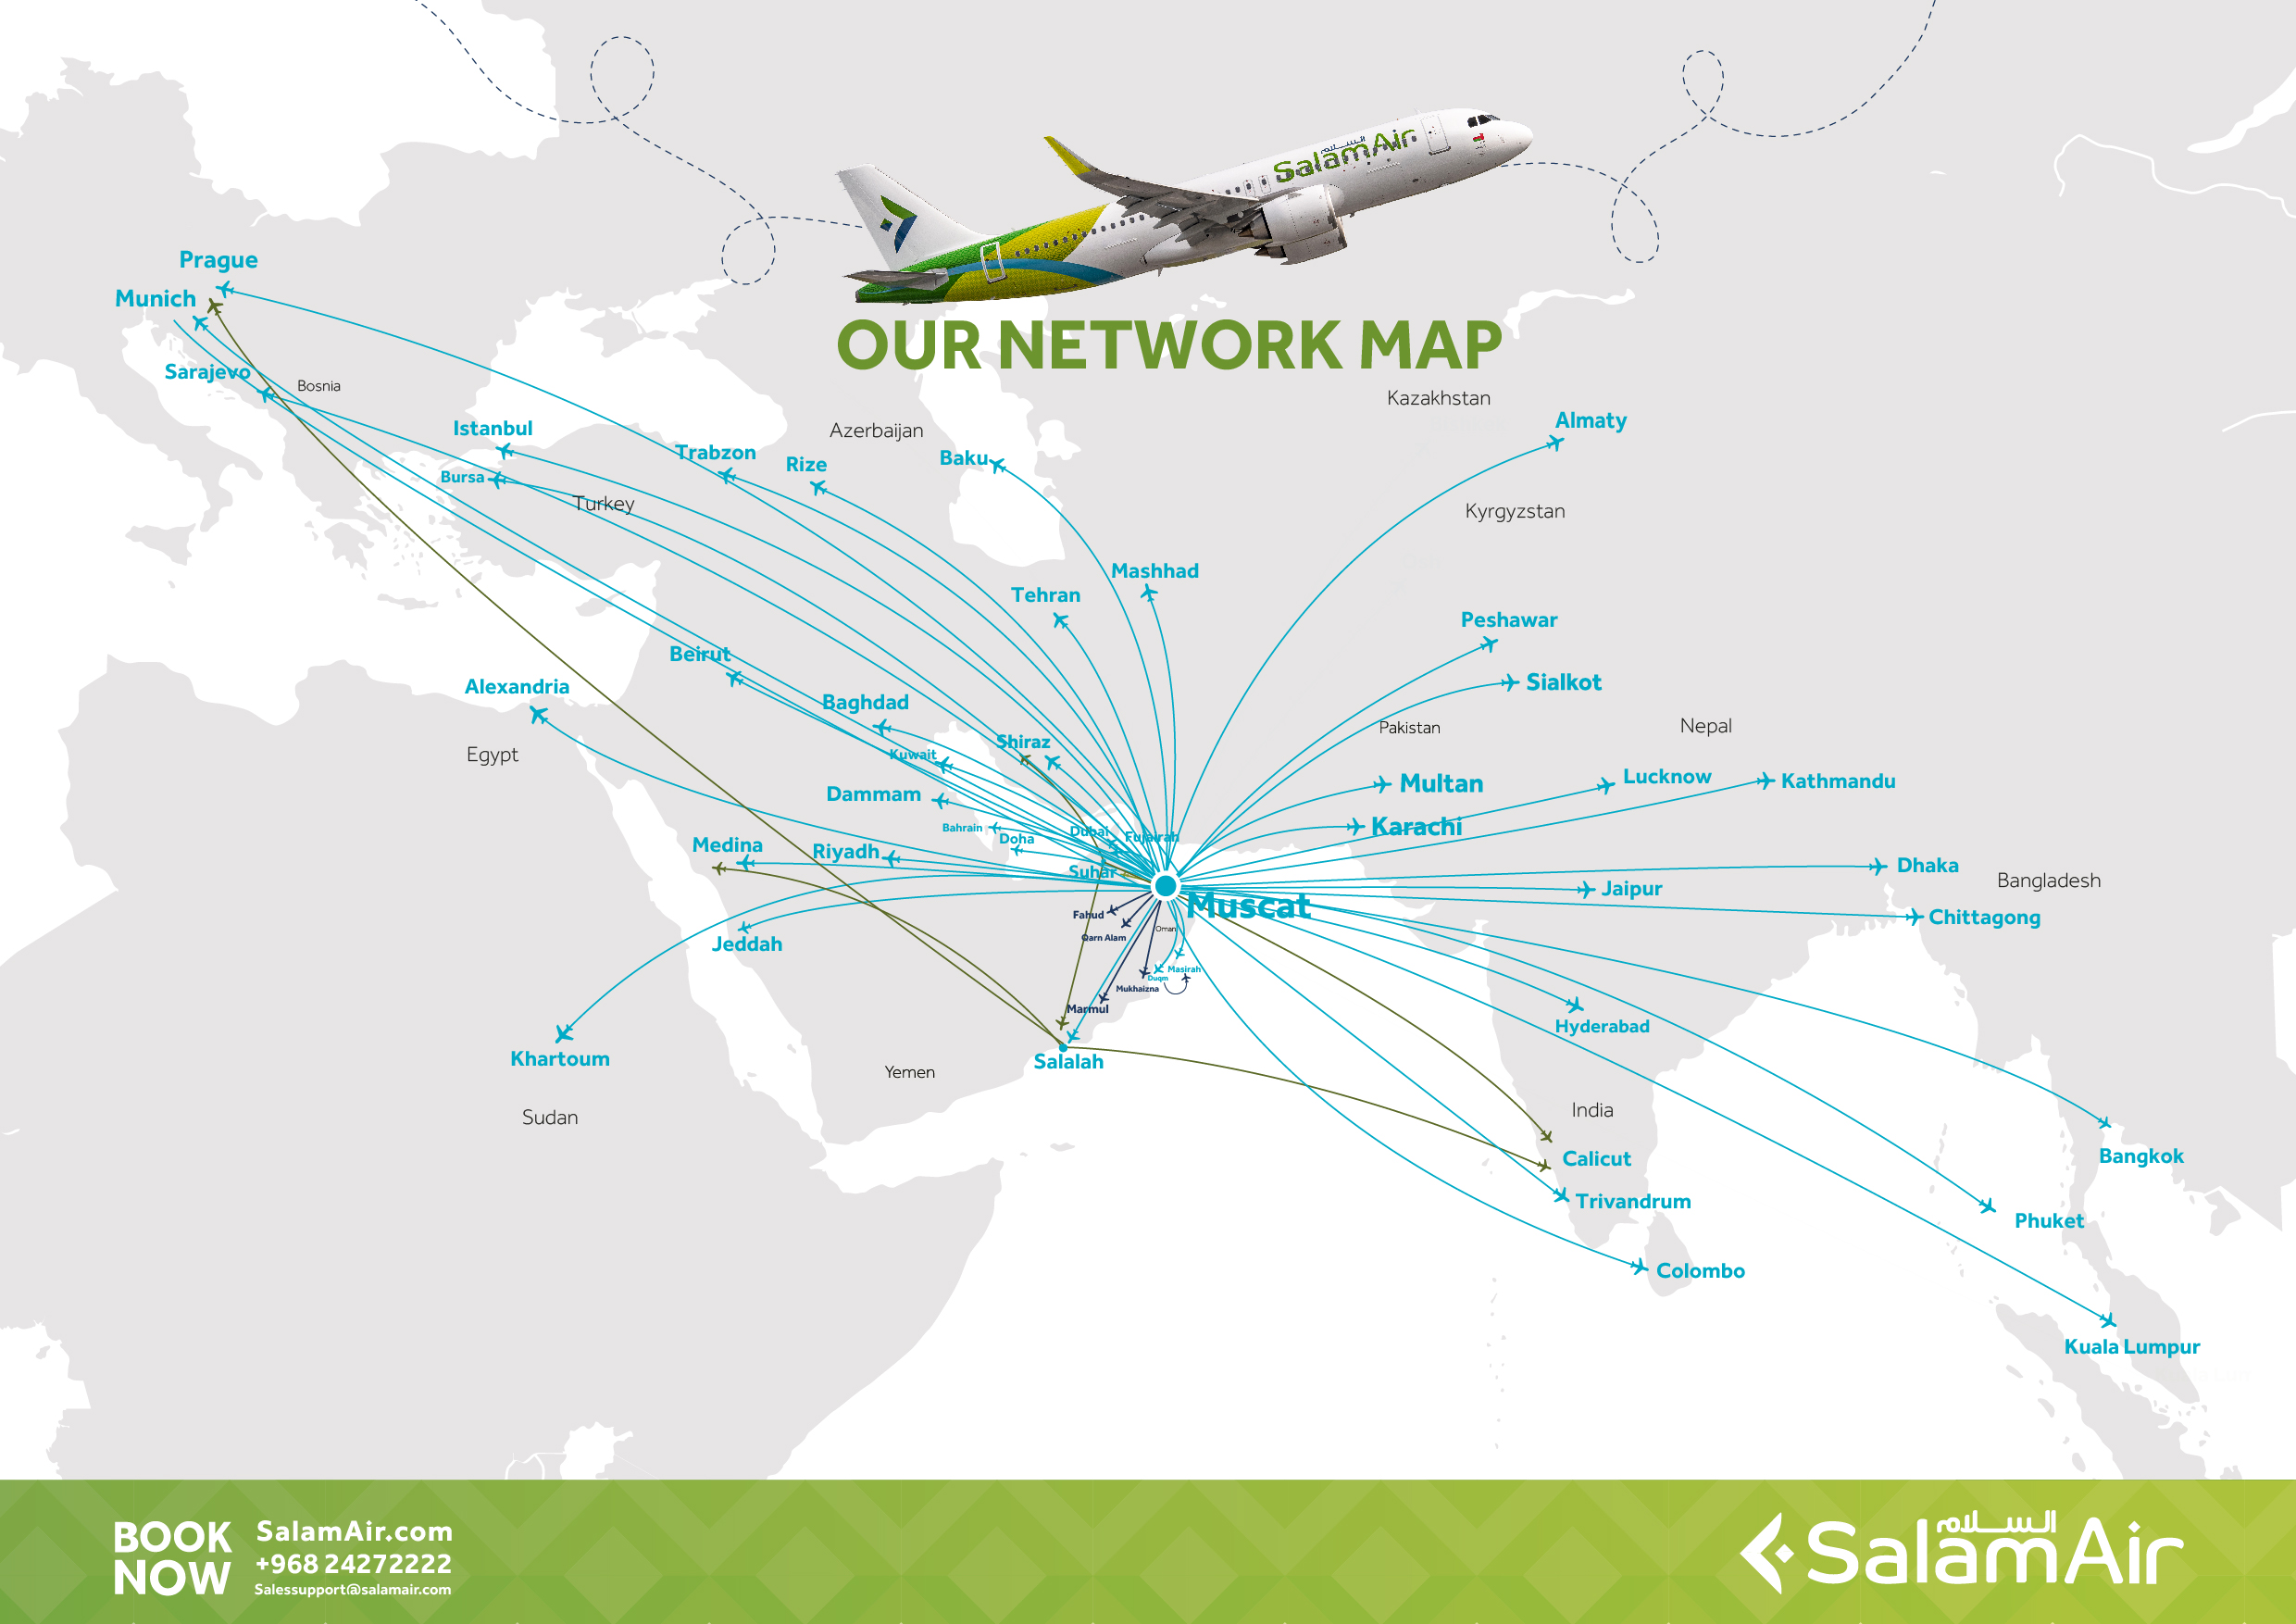 SalamAir Airline Network Map